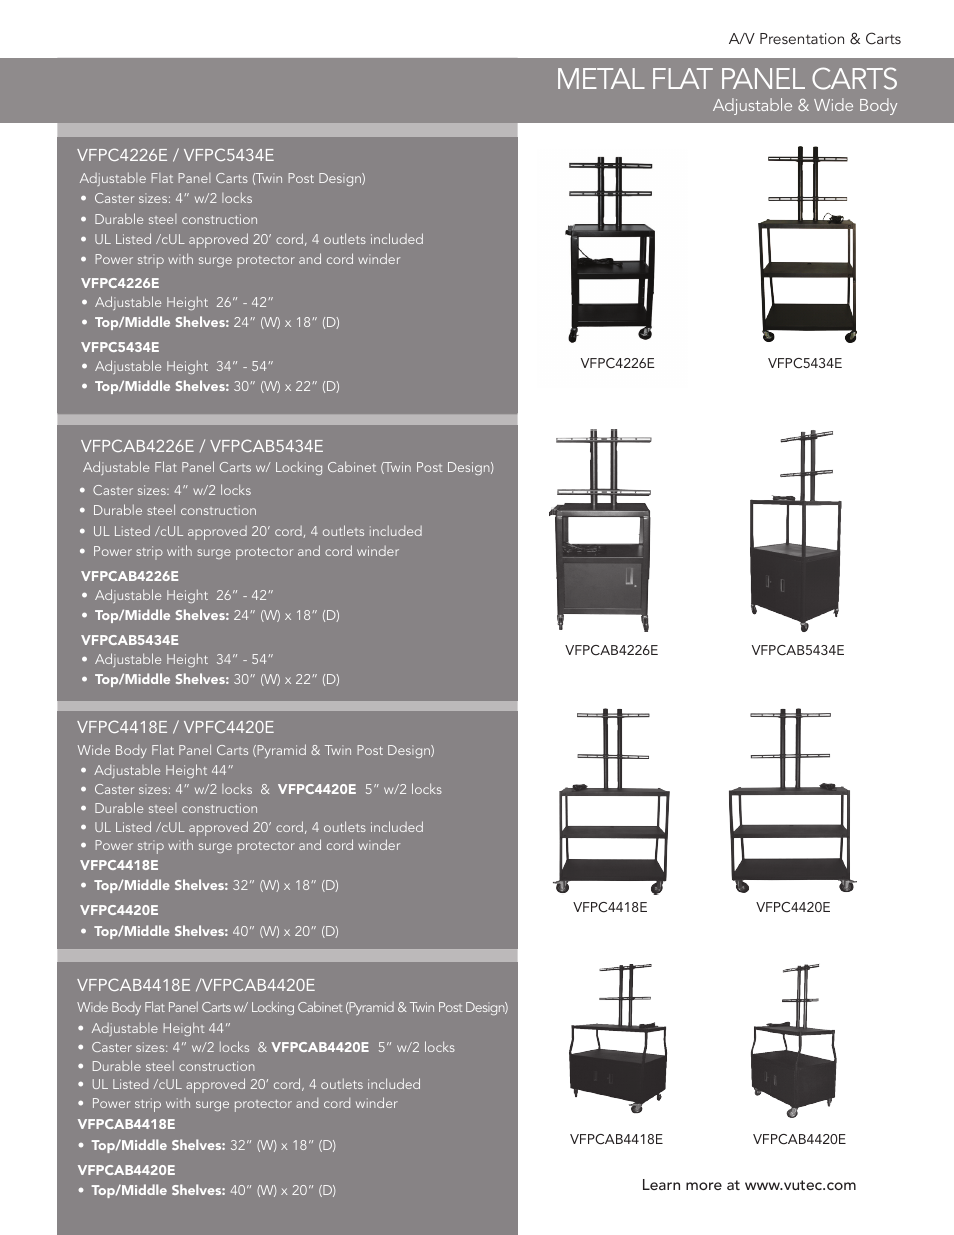 Vutec METAL FLAT PANEL CARTS - Product Sheet User Manual | 1 page